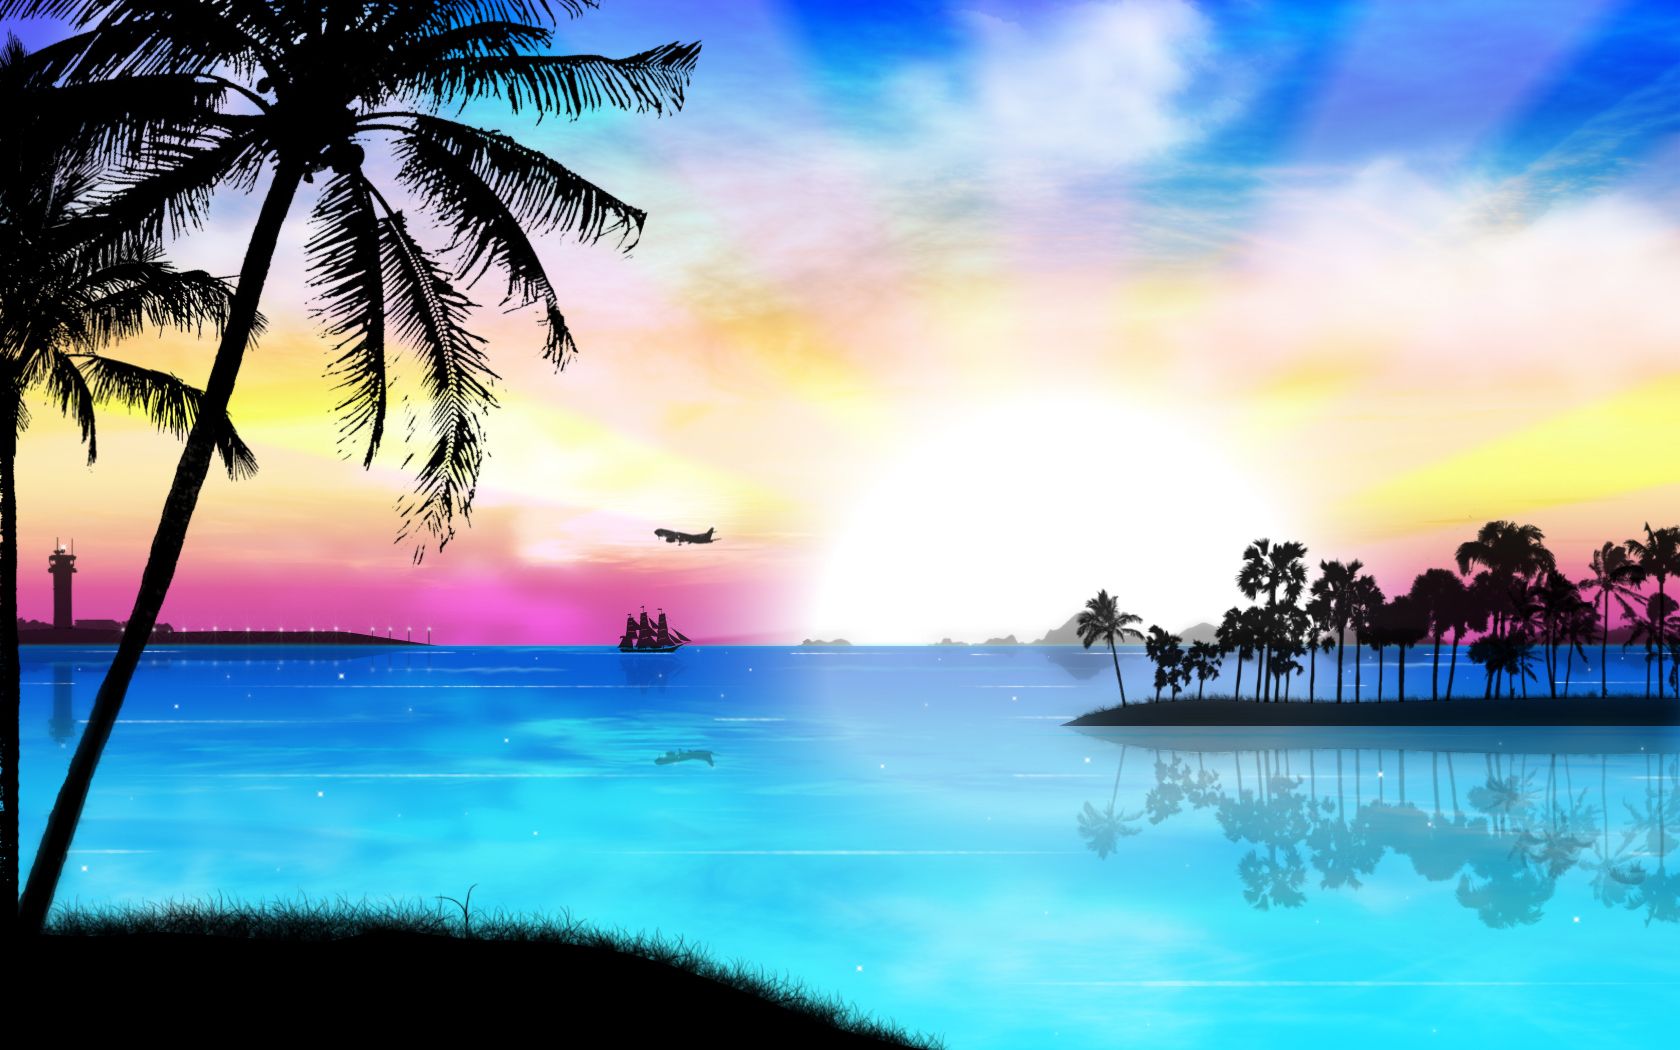 Free download HD tropical island beach paradise wallpaper